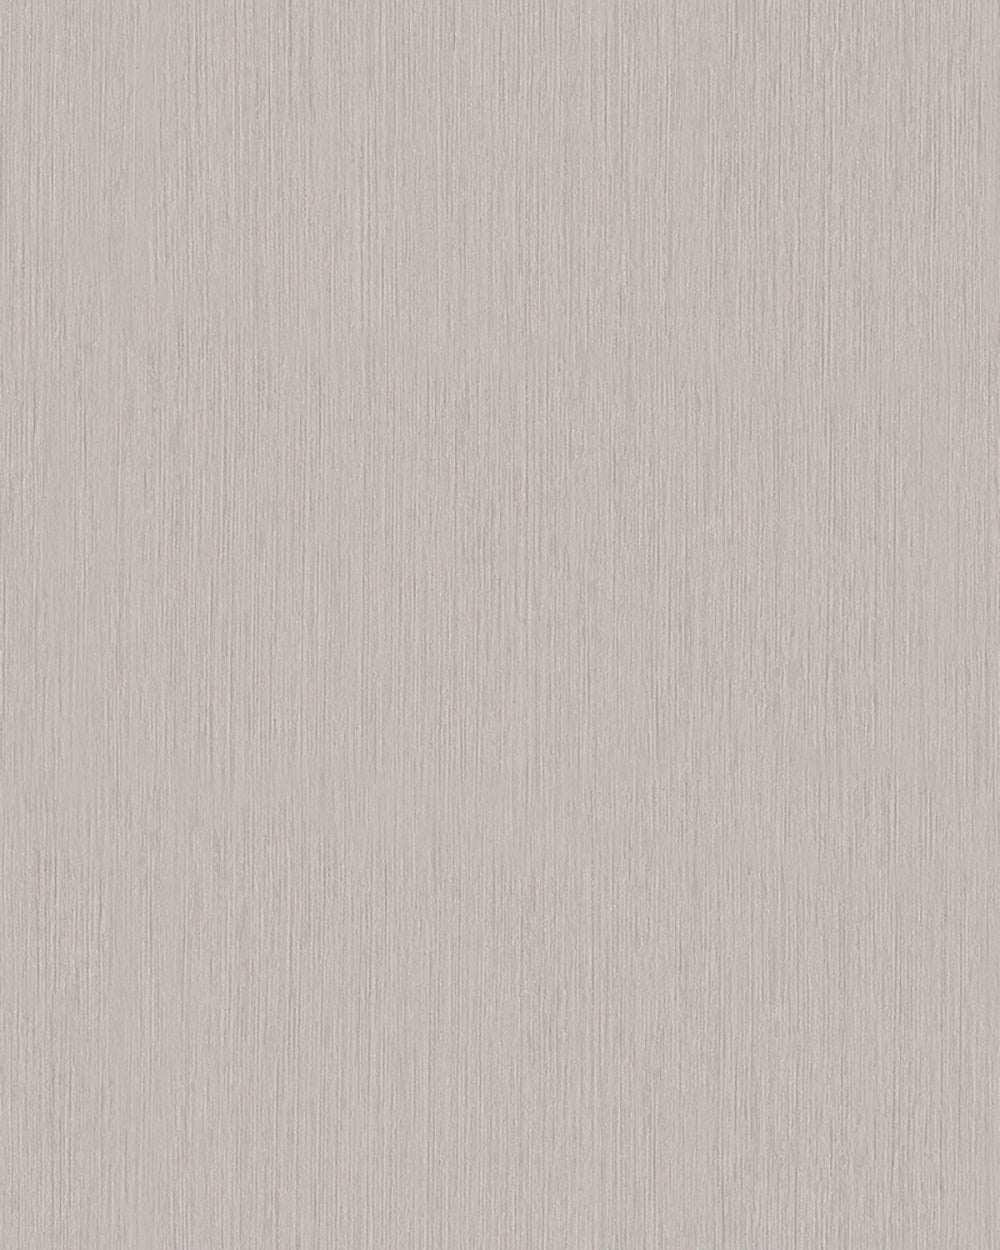 Modernista - Textured Plain plain wallpaper Marburg Roll Taupe  32271